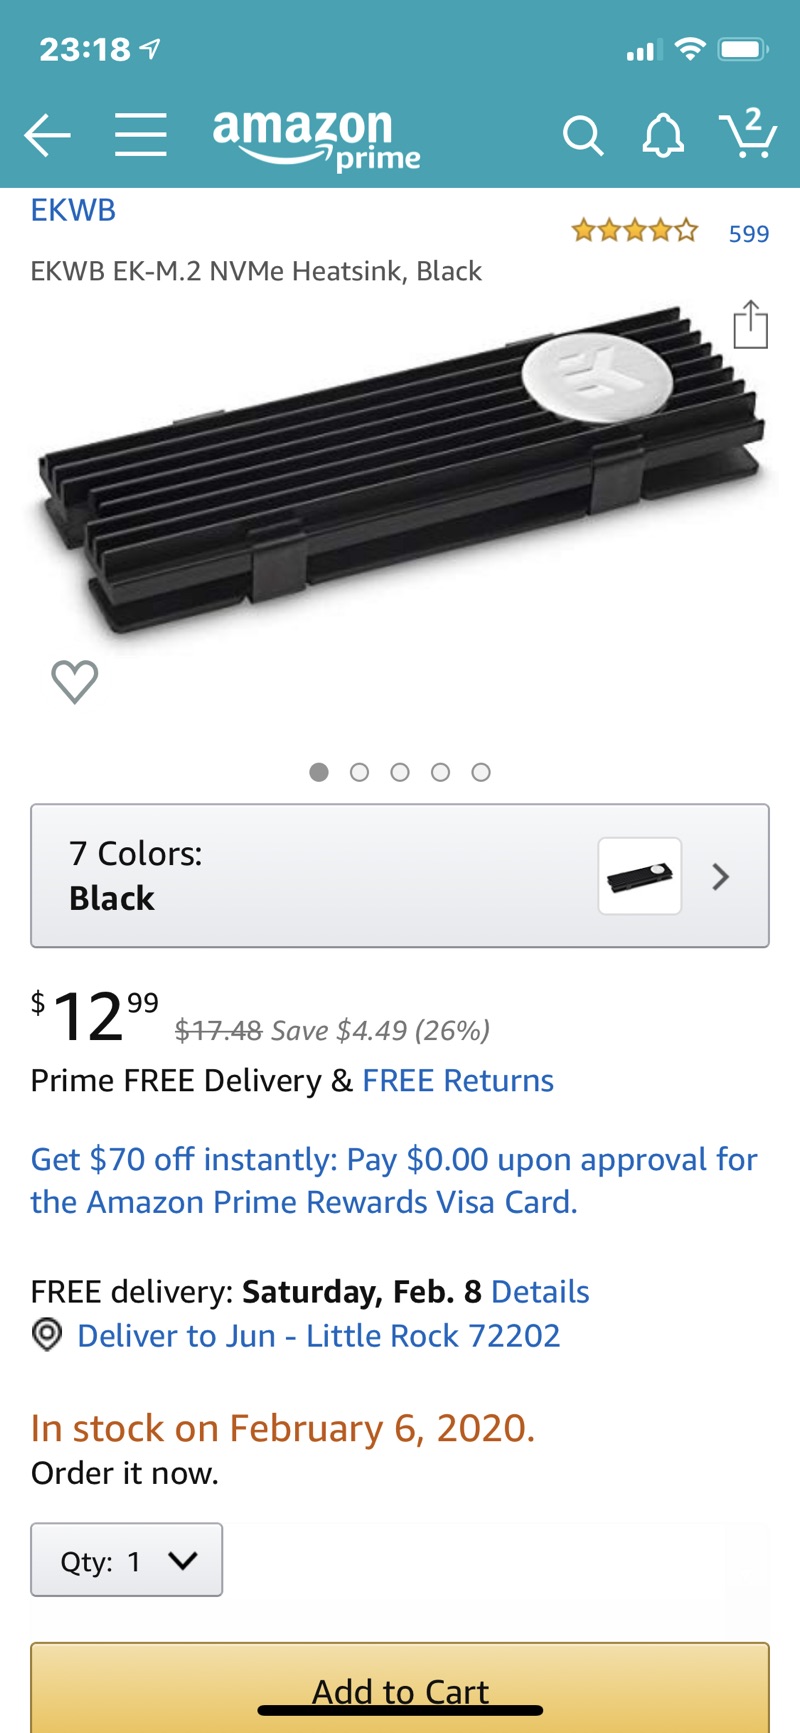 Amazon.com: EKWB EK-M.2 NVMe Heatsink, Black: Computers & Accessories
史低价预定EK M.2 SSD散热器